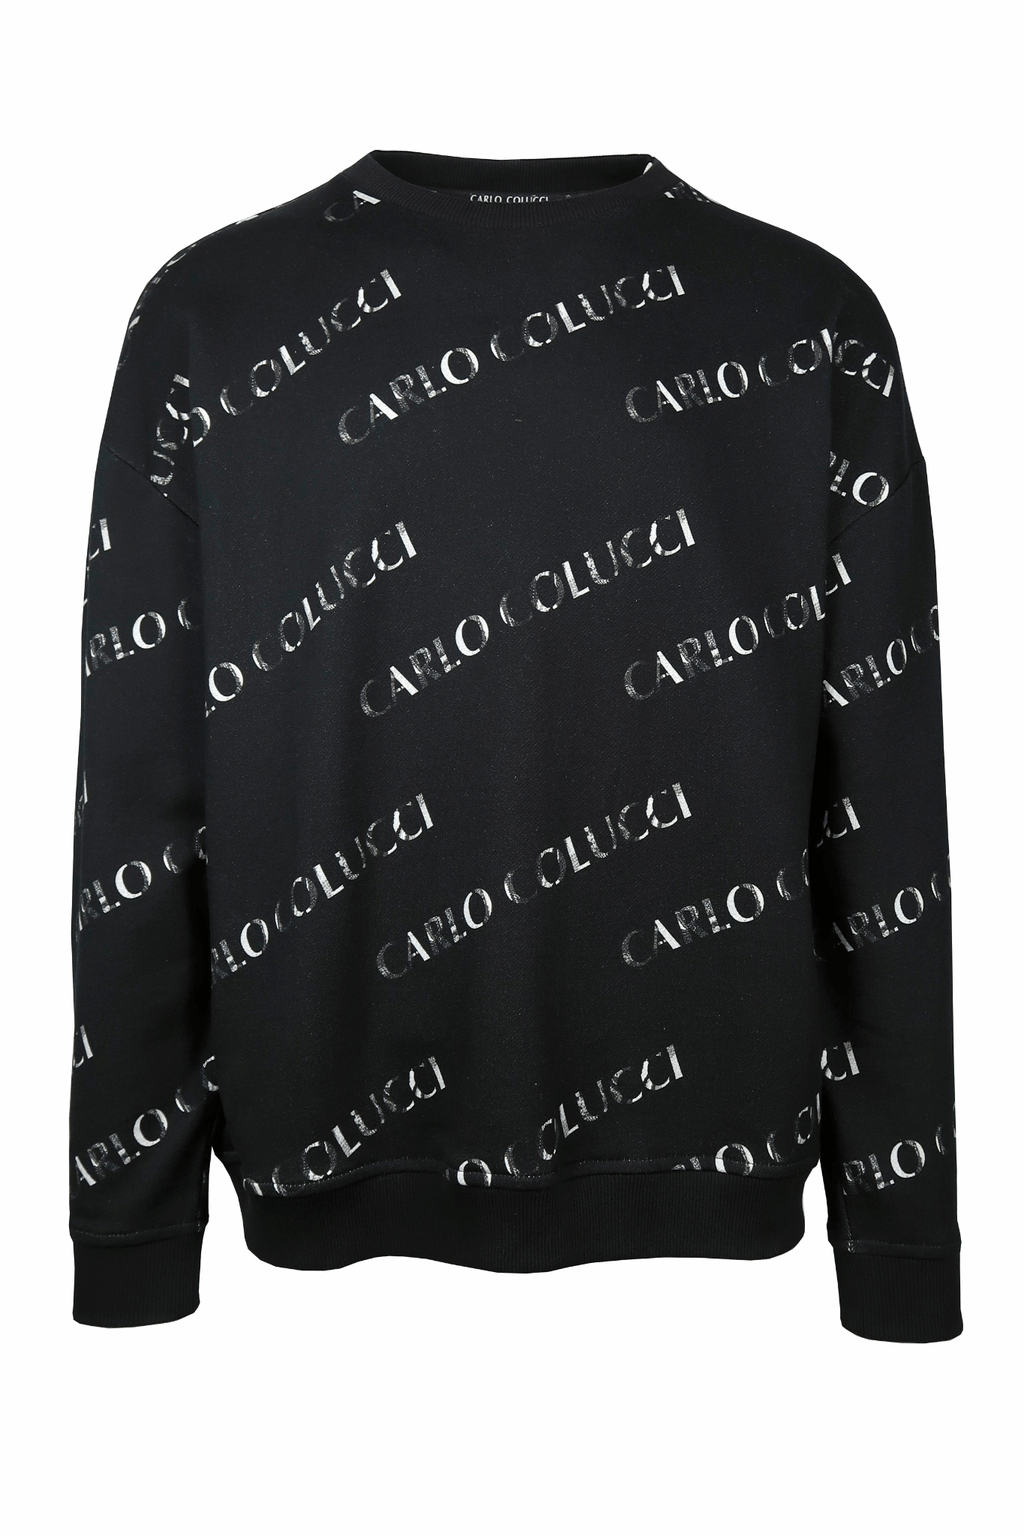 Carlo Colucci All Over Print Sweatshirt Black